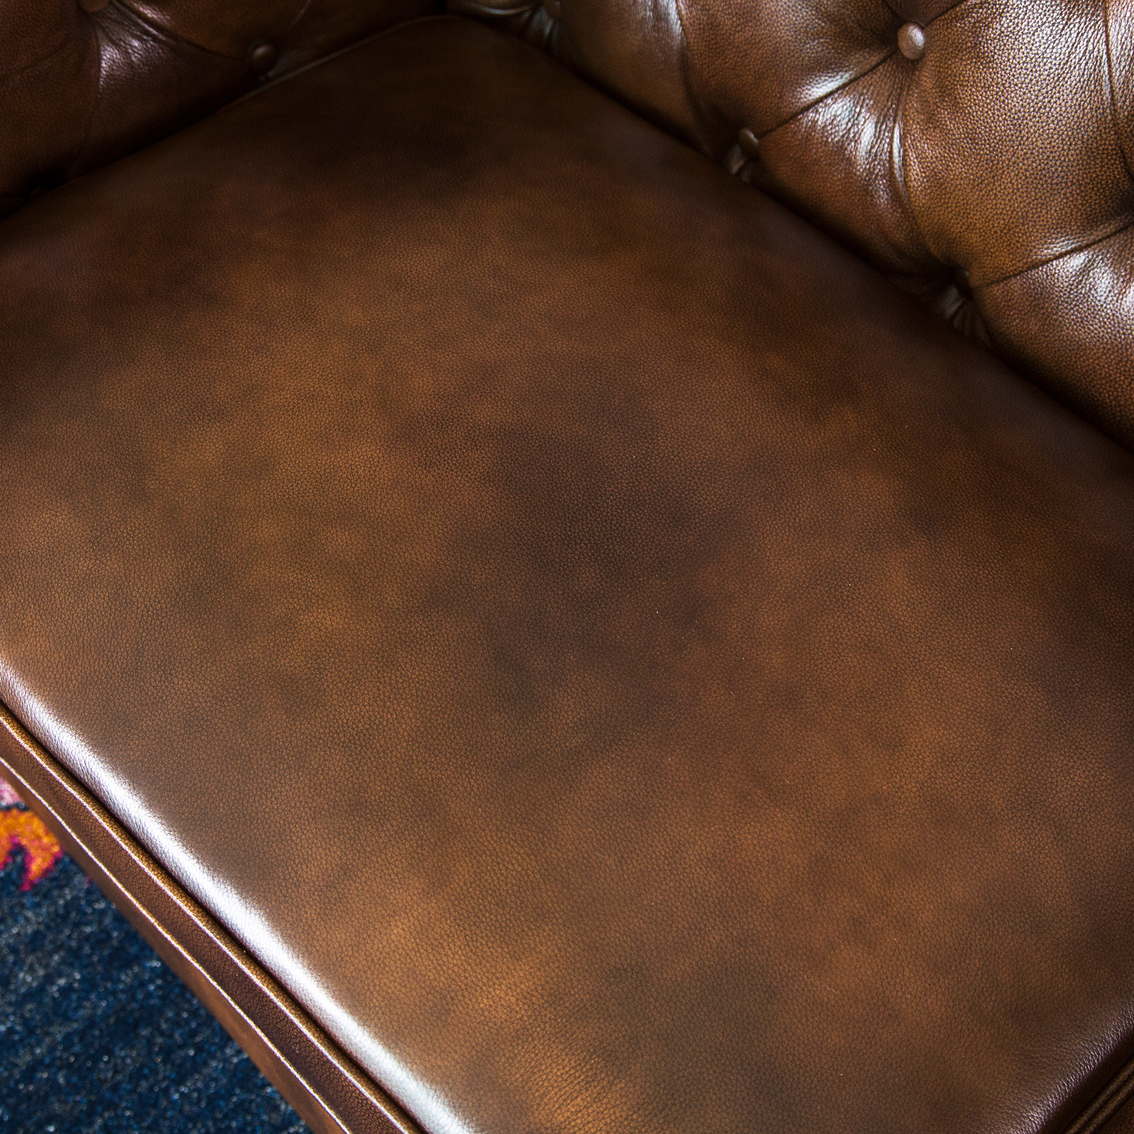 Abbyson Tuscan Tufted Leather Sofa - Image 4 of 7